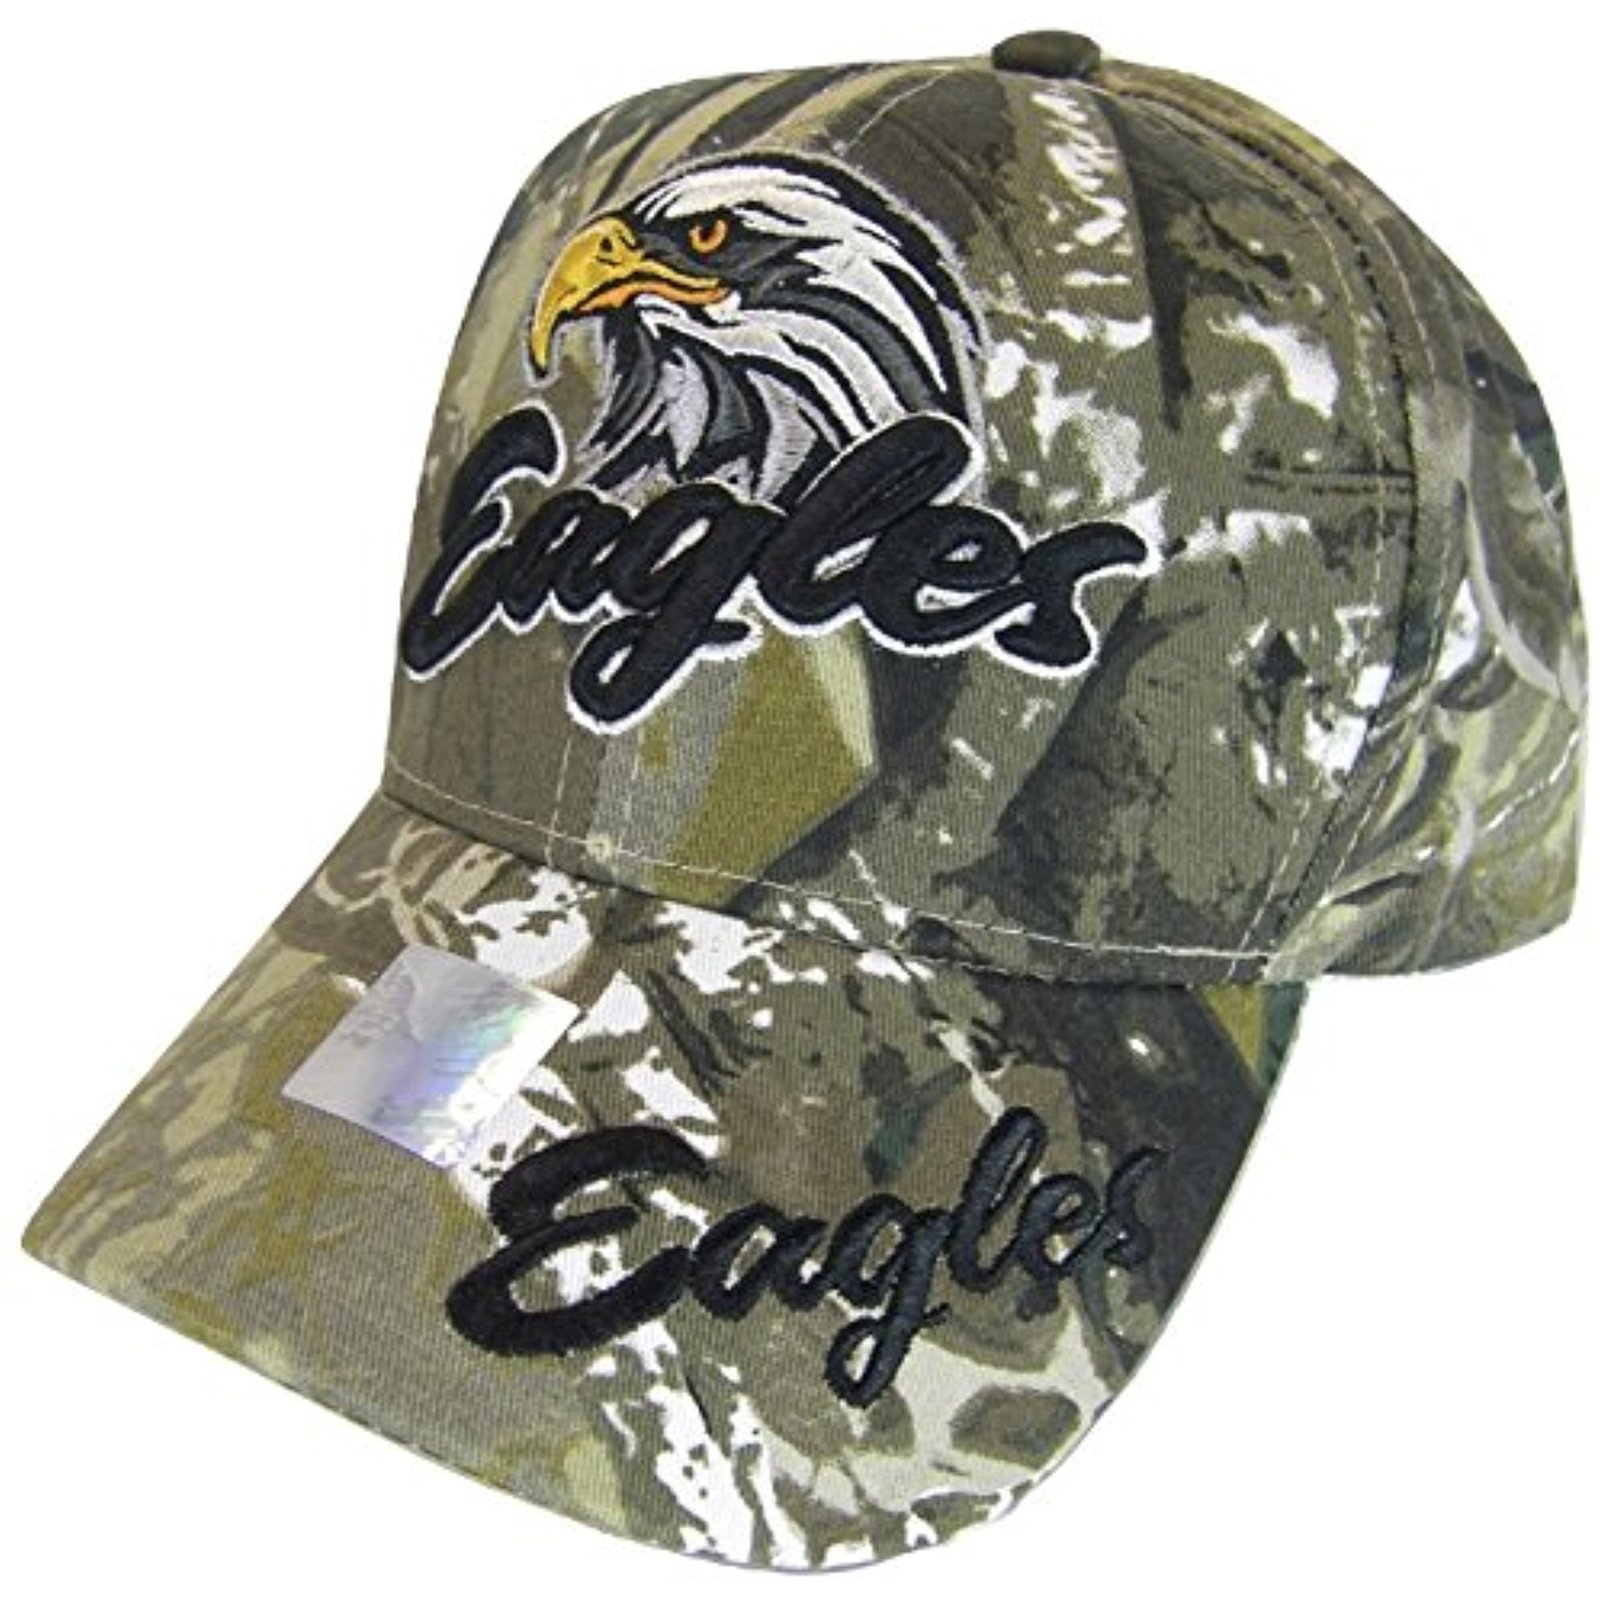 Men's Eagles Adjustable Baseball Cap (Hunting Camo Cotton)